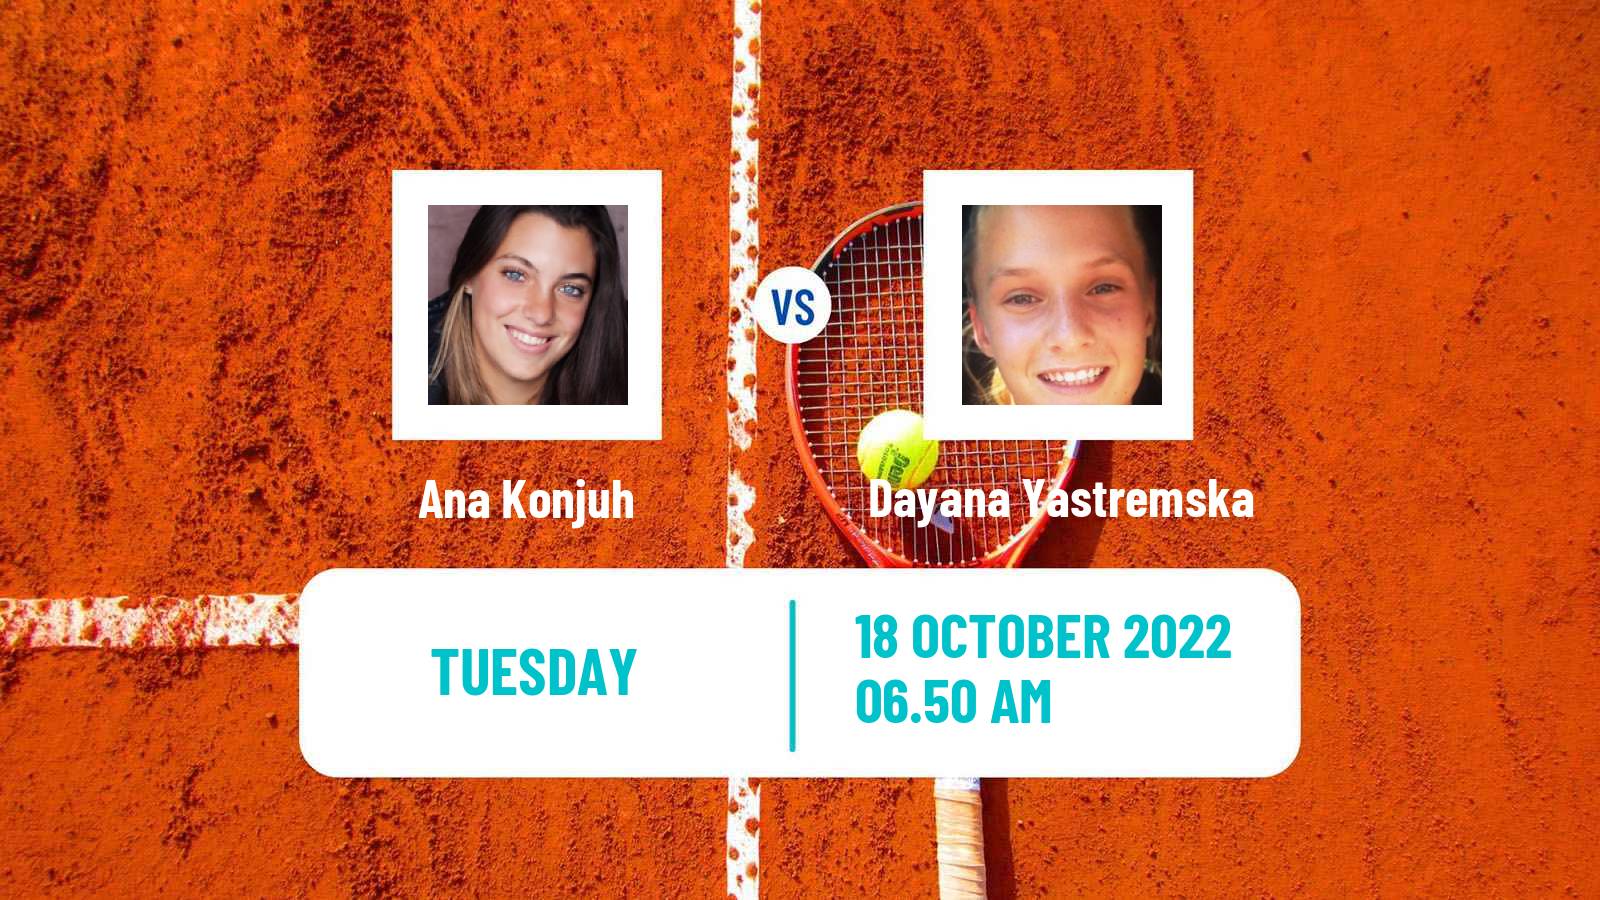 Tennis ATP Challenger Ana Konjuh - Dayana Yastremska